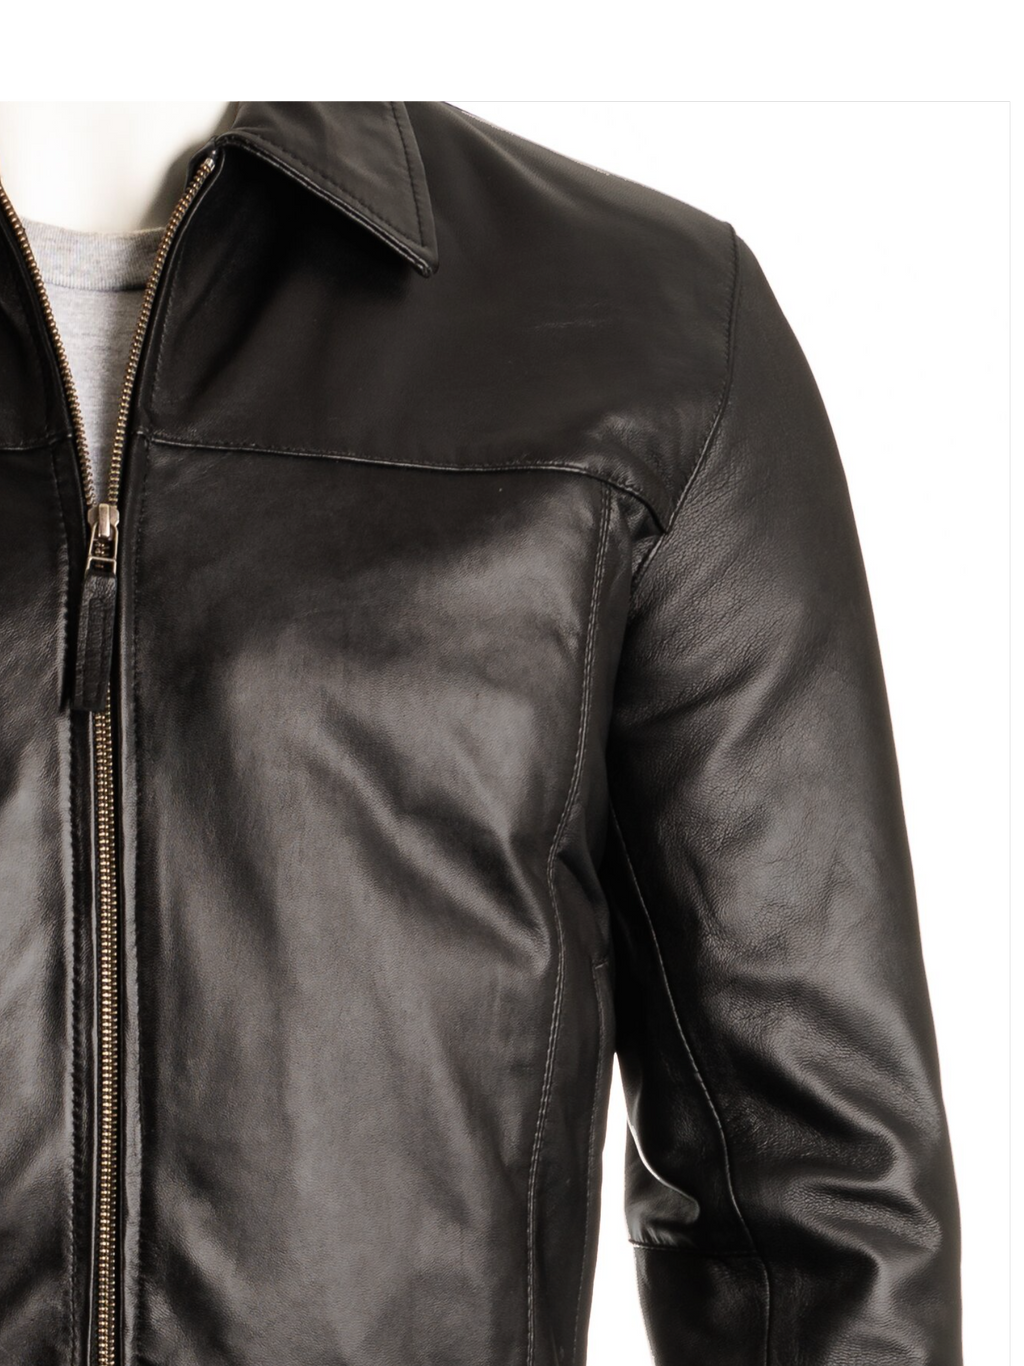 Men's Black Harrington Style Bomber Leather Jacket: Matias